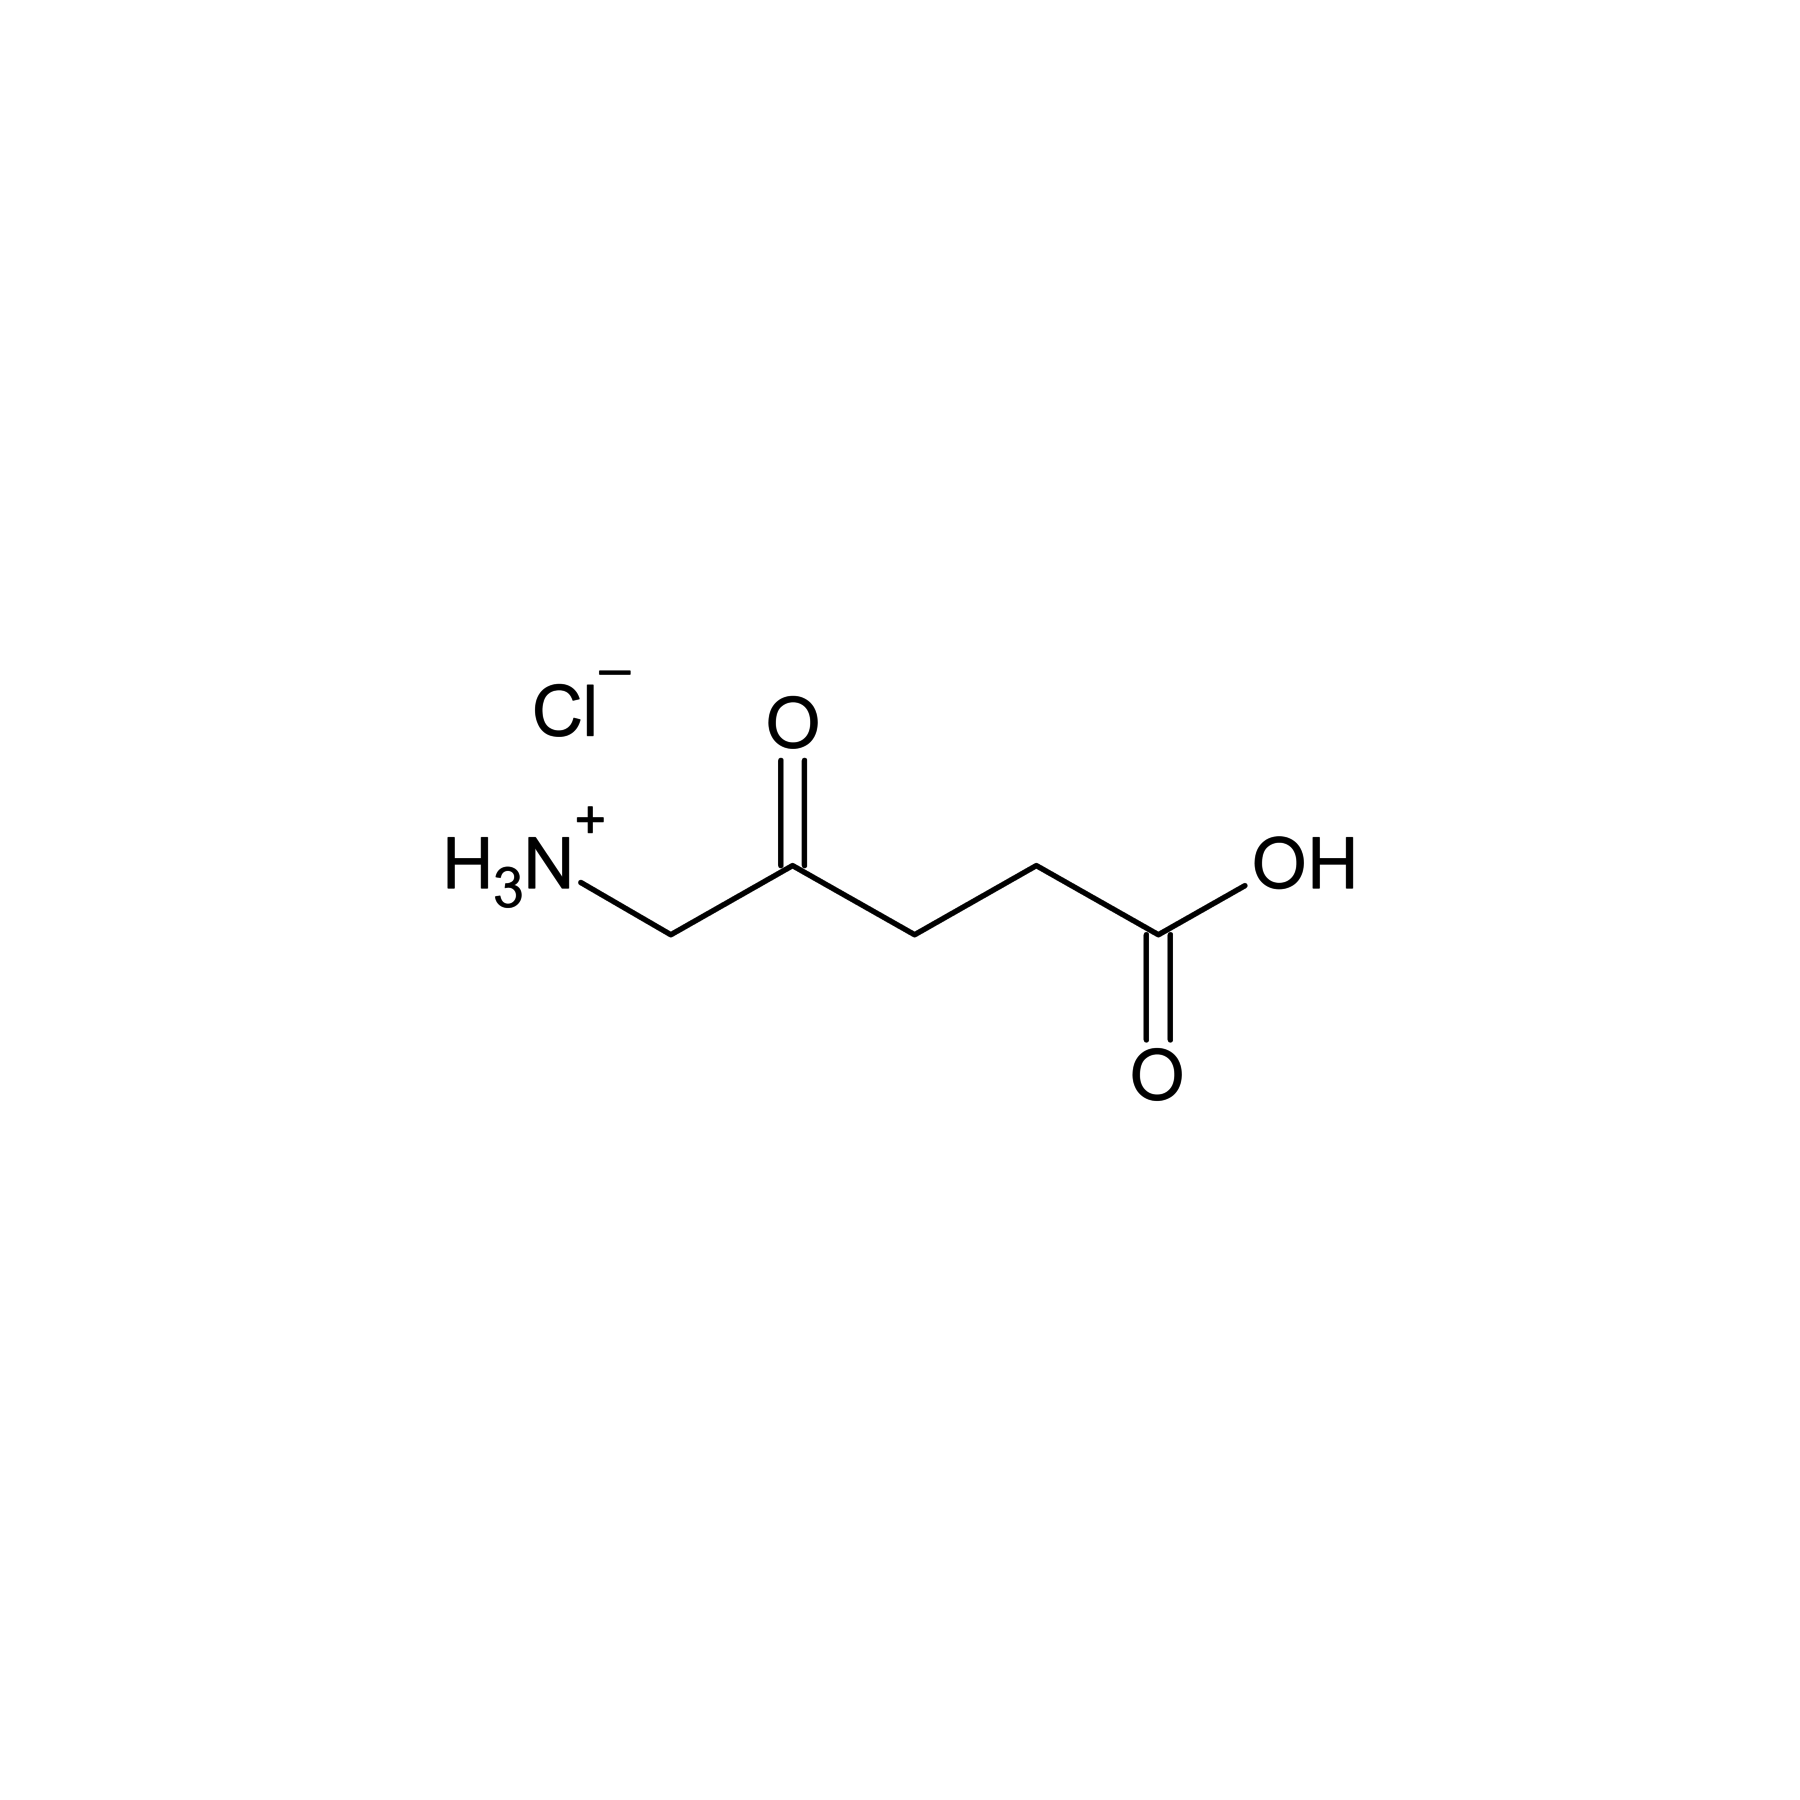 5-Aminolevulinic acid hydrochloride - CAS-Number 5451-09-2 - Order 